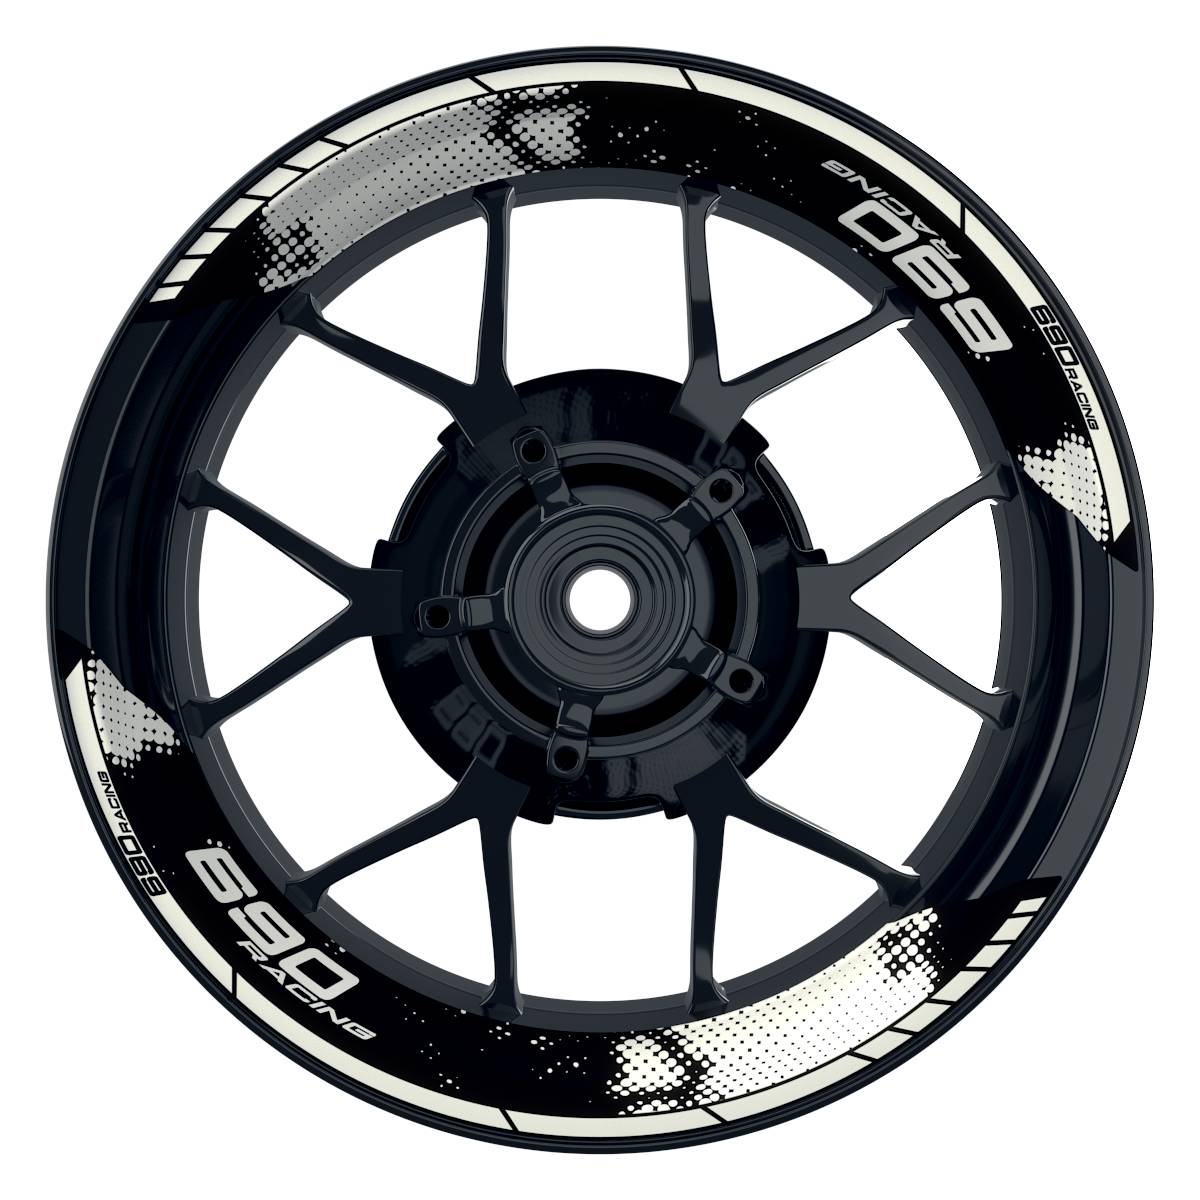 KTM Racing 690 Dots schwarz weiss Frontansicht